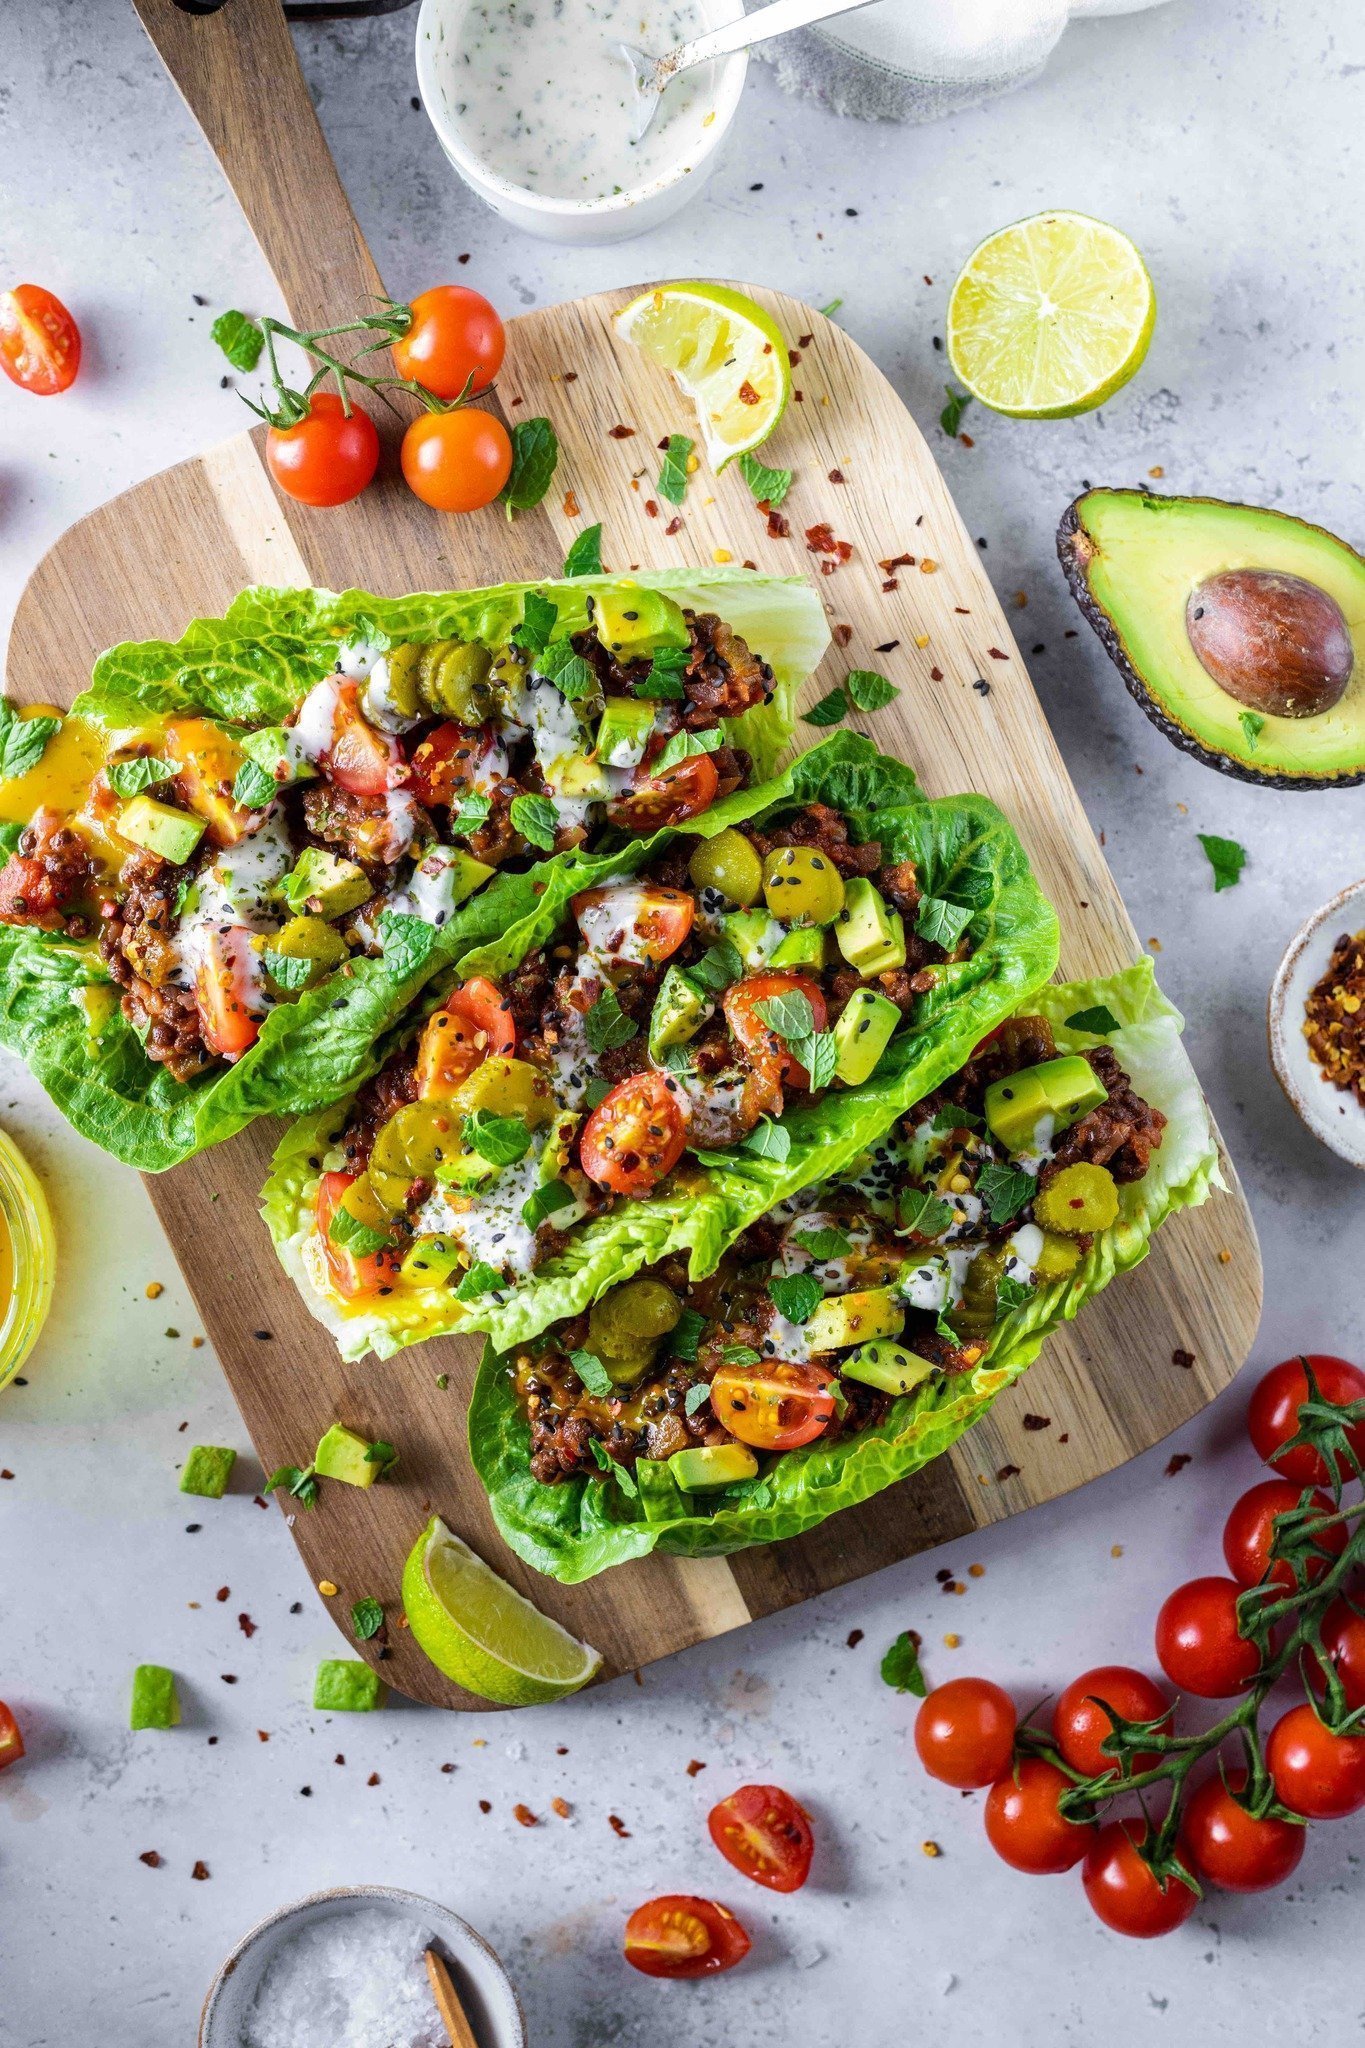 Lettuce Tacos - The Healthiest Tacos Recipe